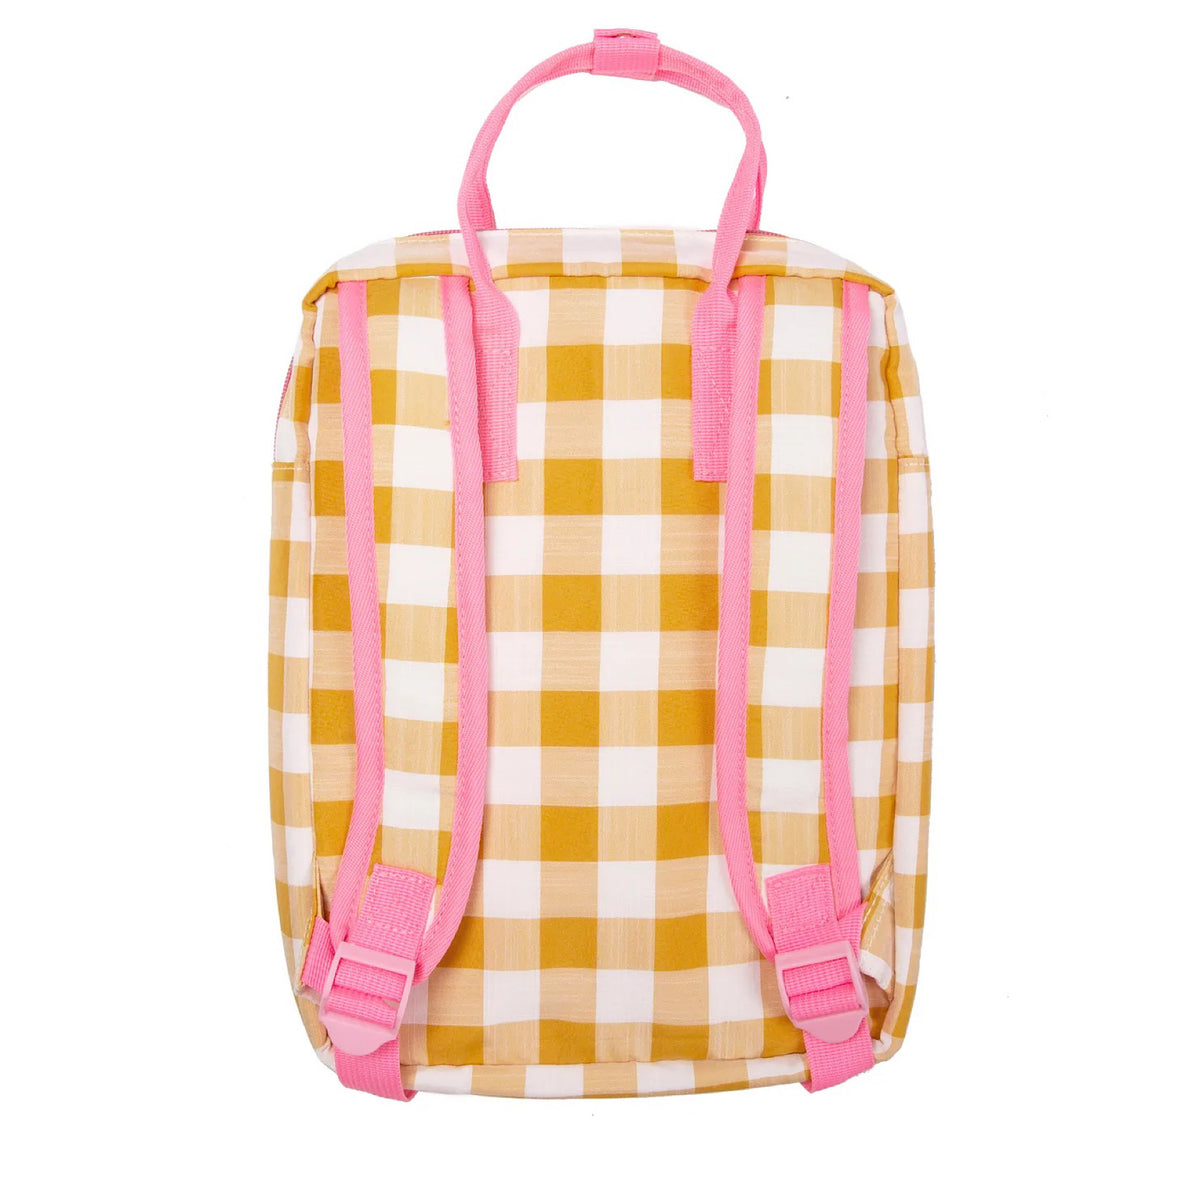 Retro Check Backpack, Yellow